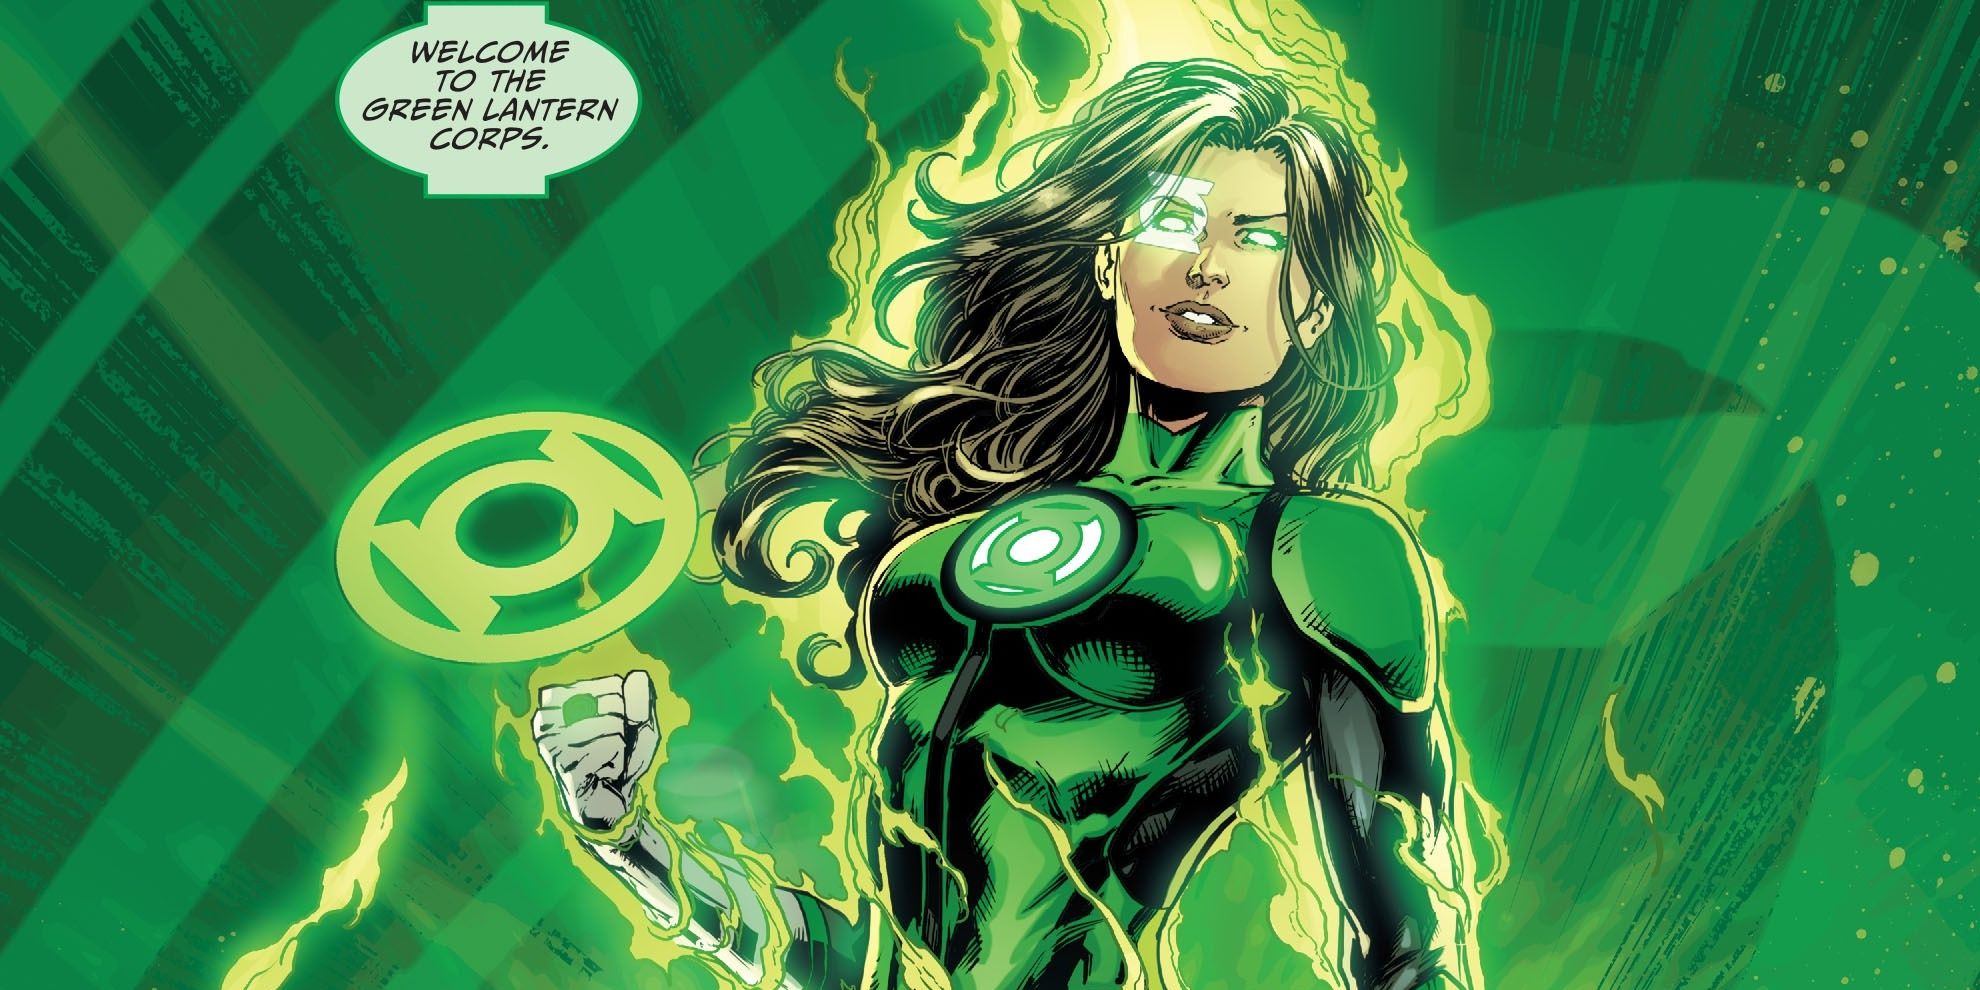 Jessica Cruz/Green Lantern in DC Comics